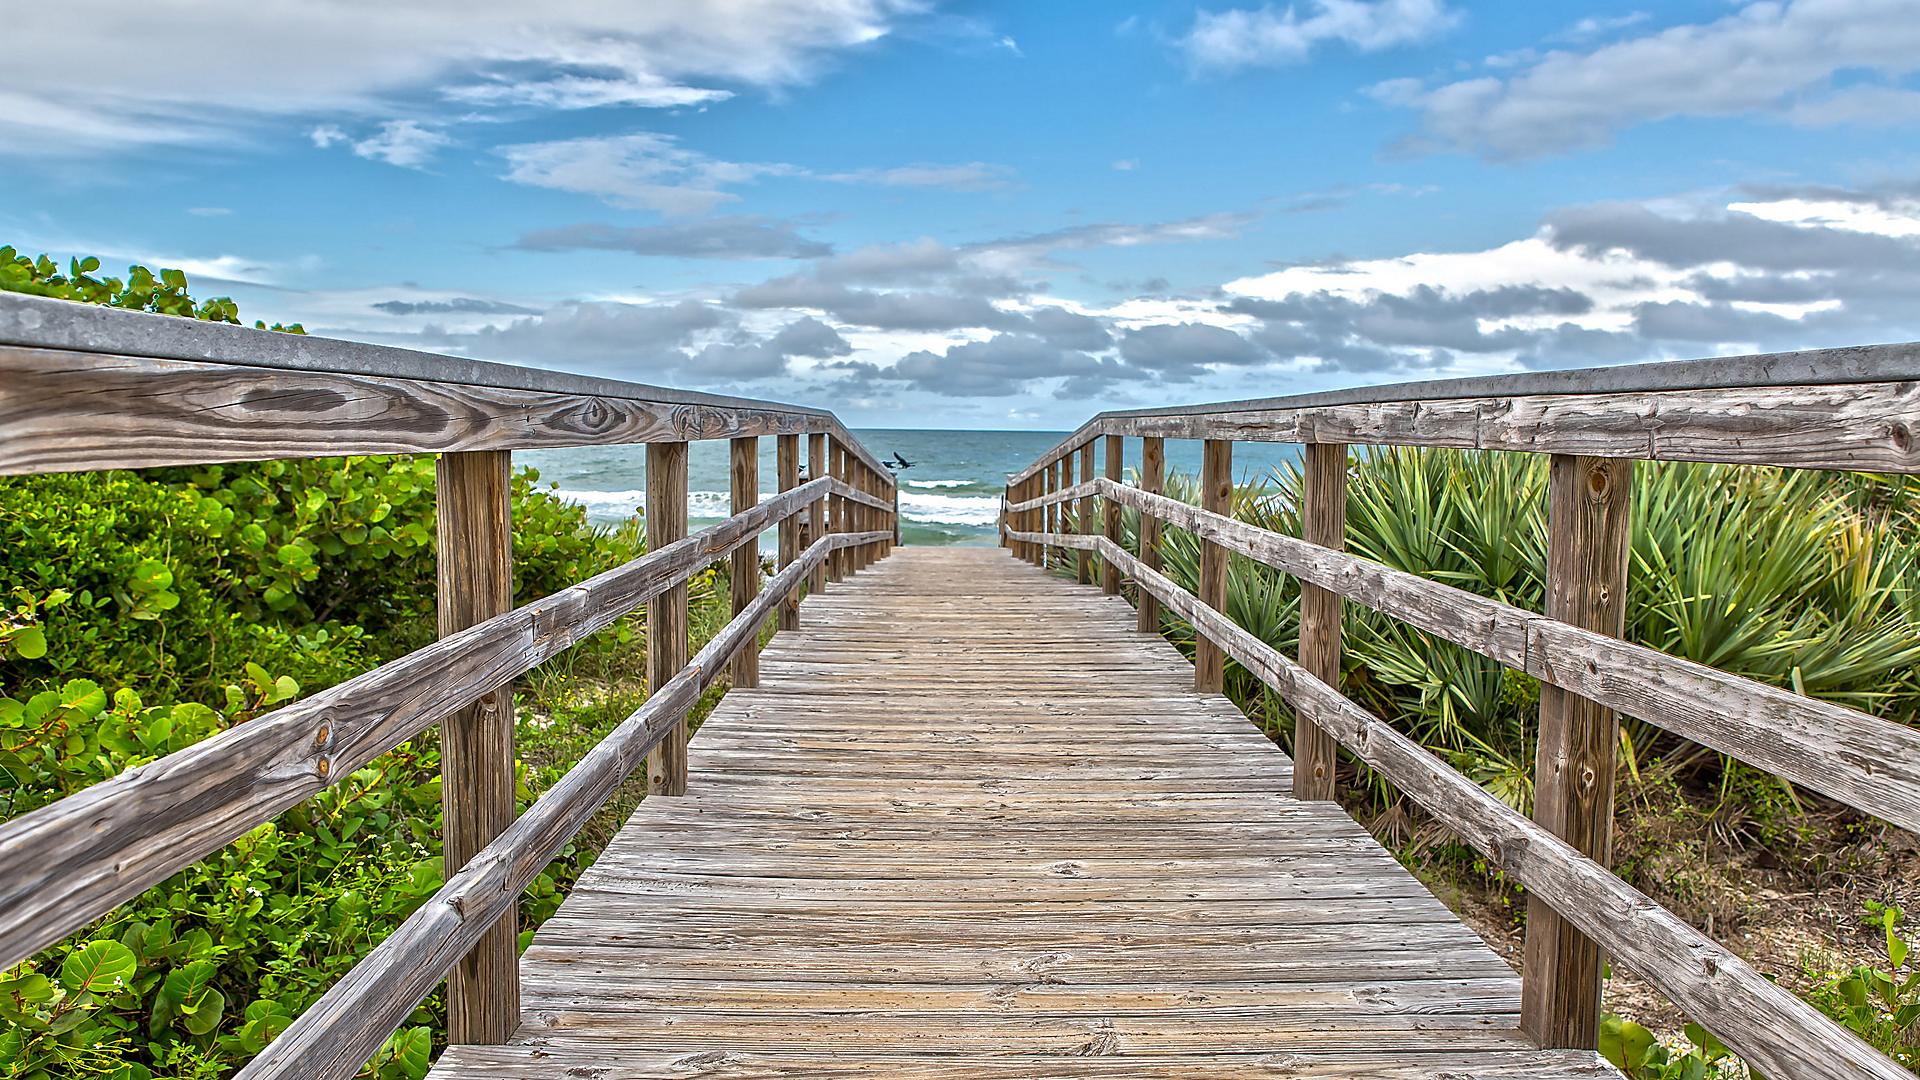 Wooden Walkway to the Beach, Orlando, Florida